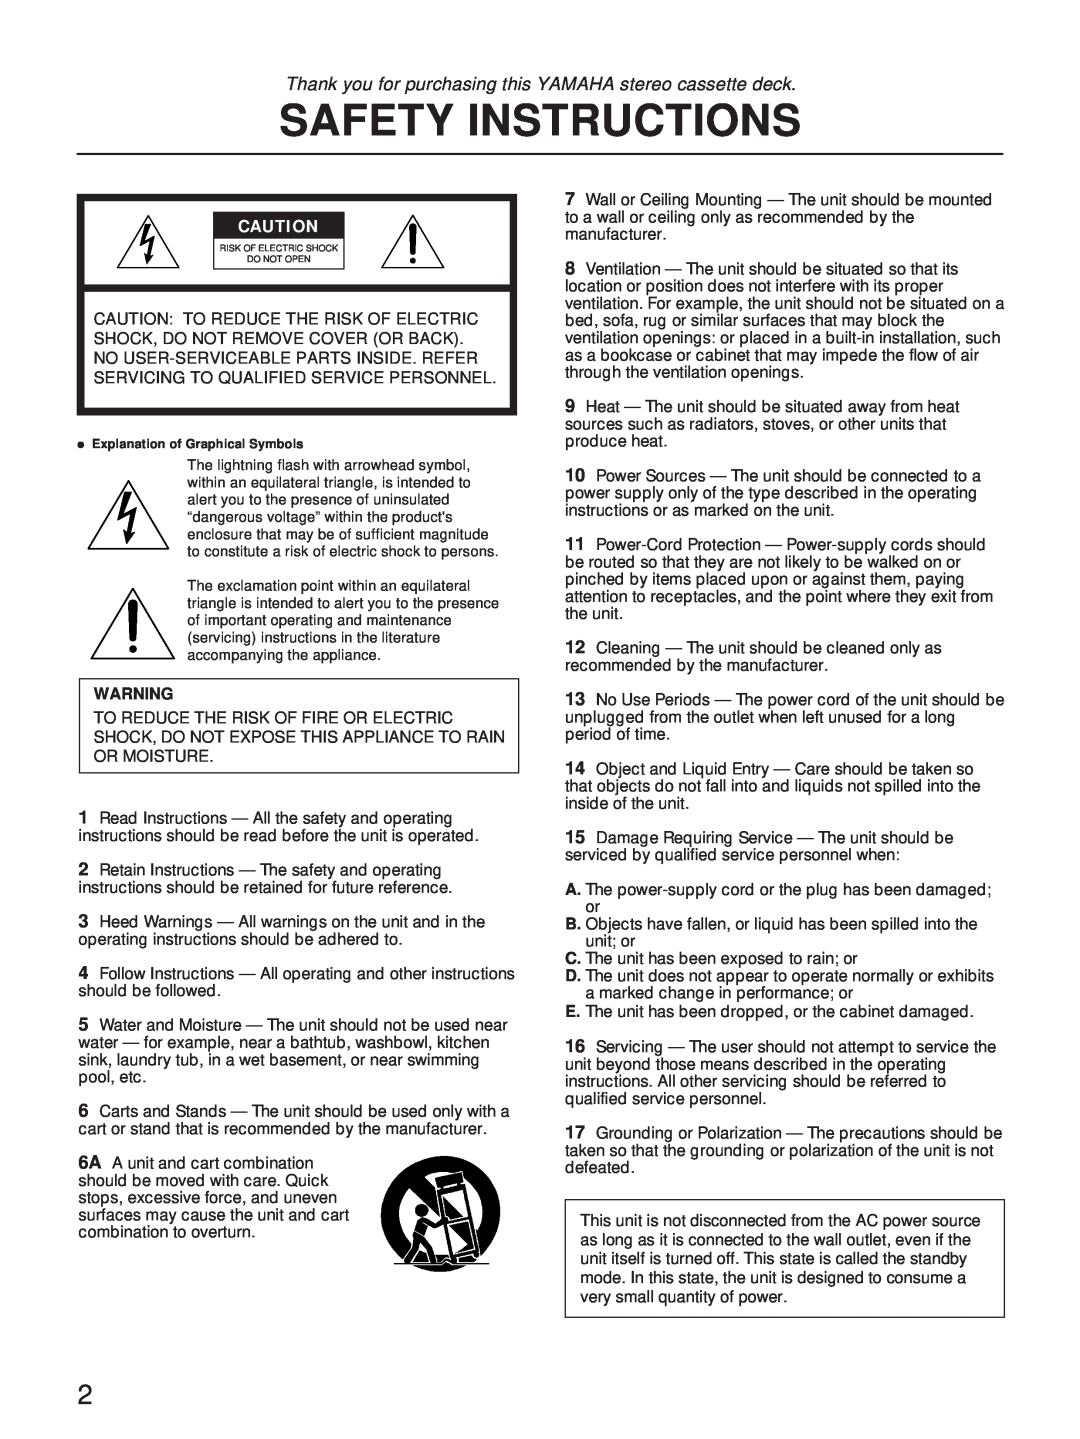 Yamaha KX-W321, KX-W421 owner manual Safety Instructions 